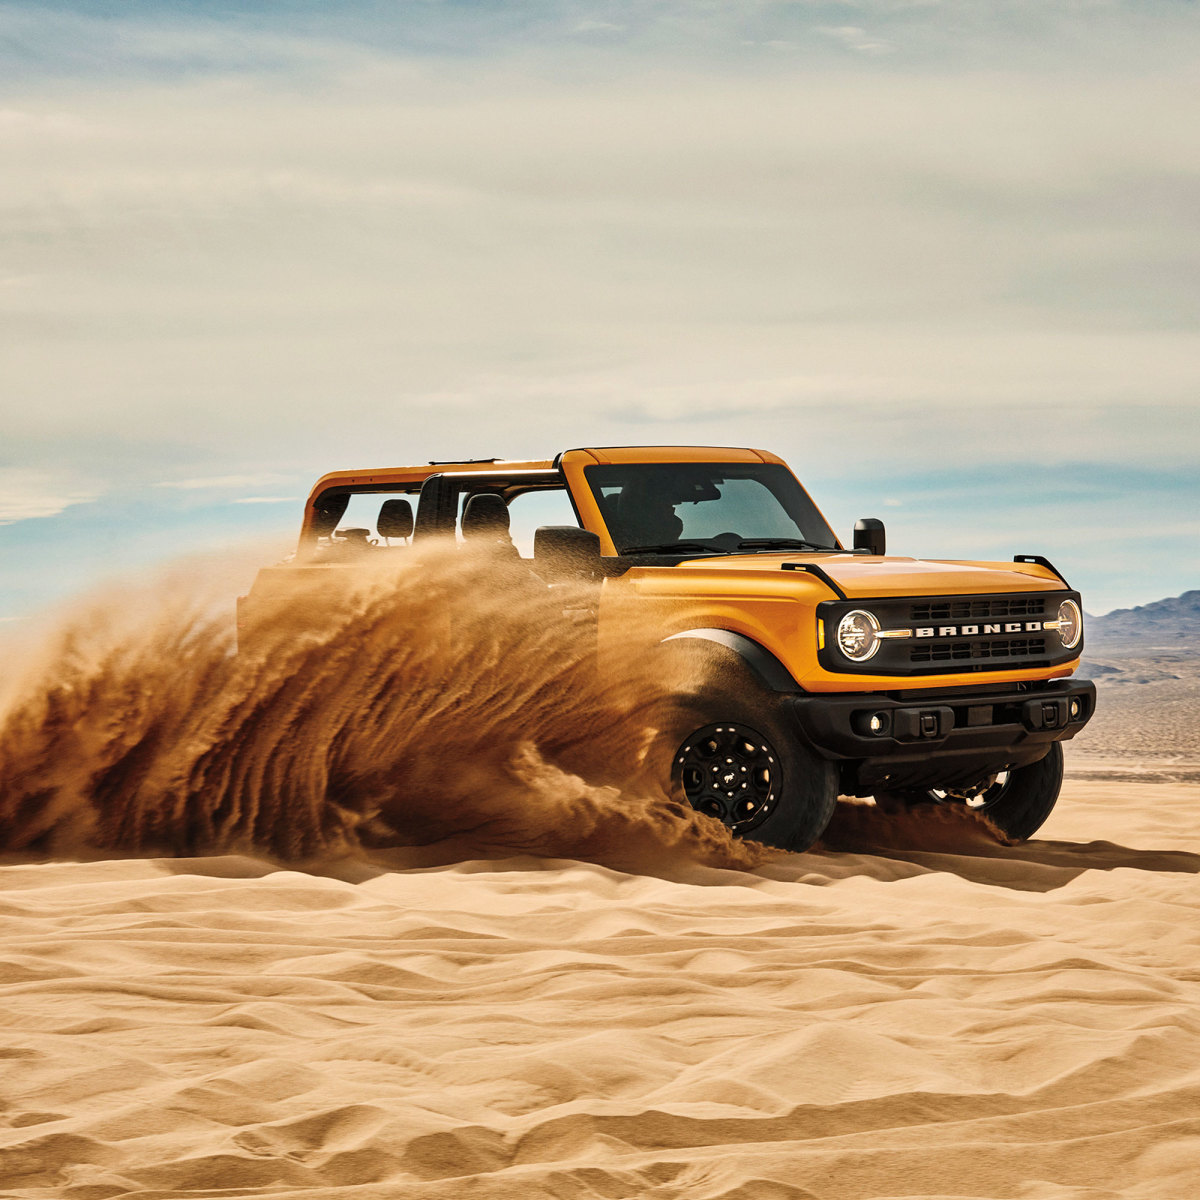 Ford Bronco tearing through sand in desert